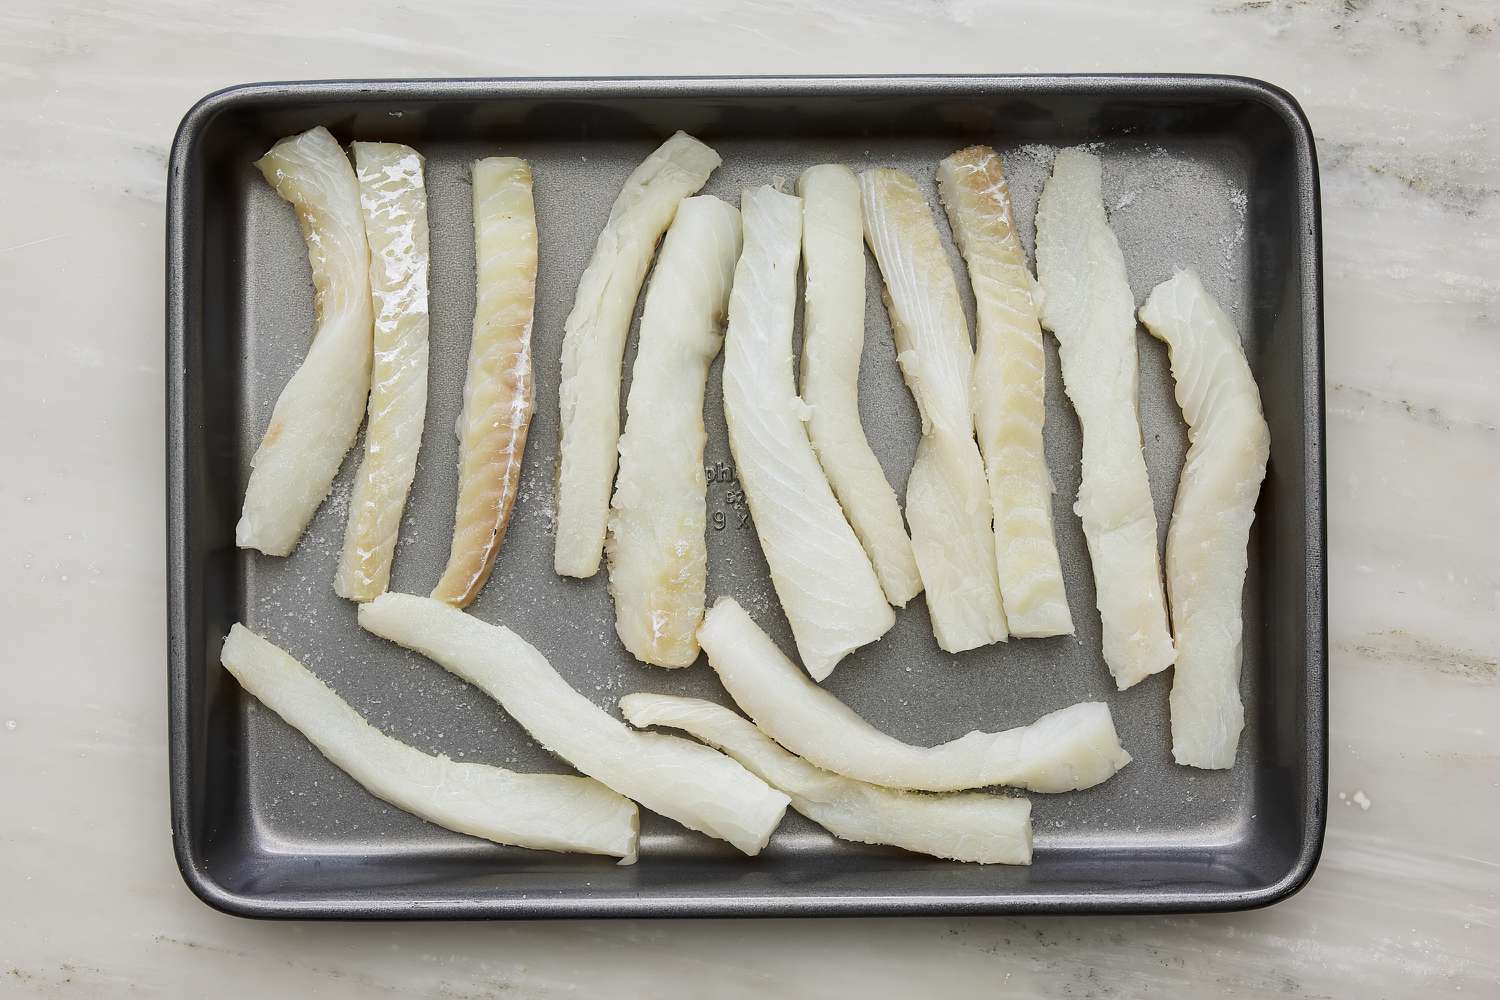 strips of cod on a baking sheet